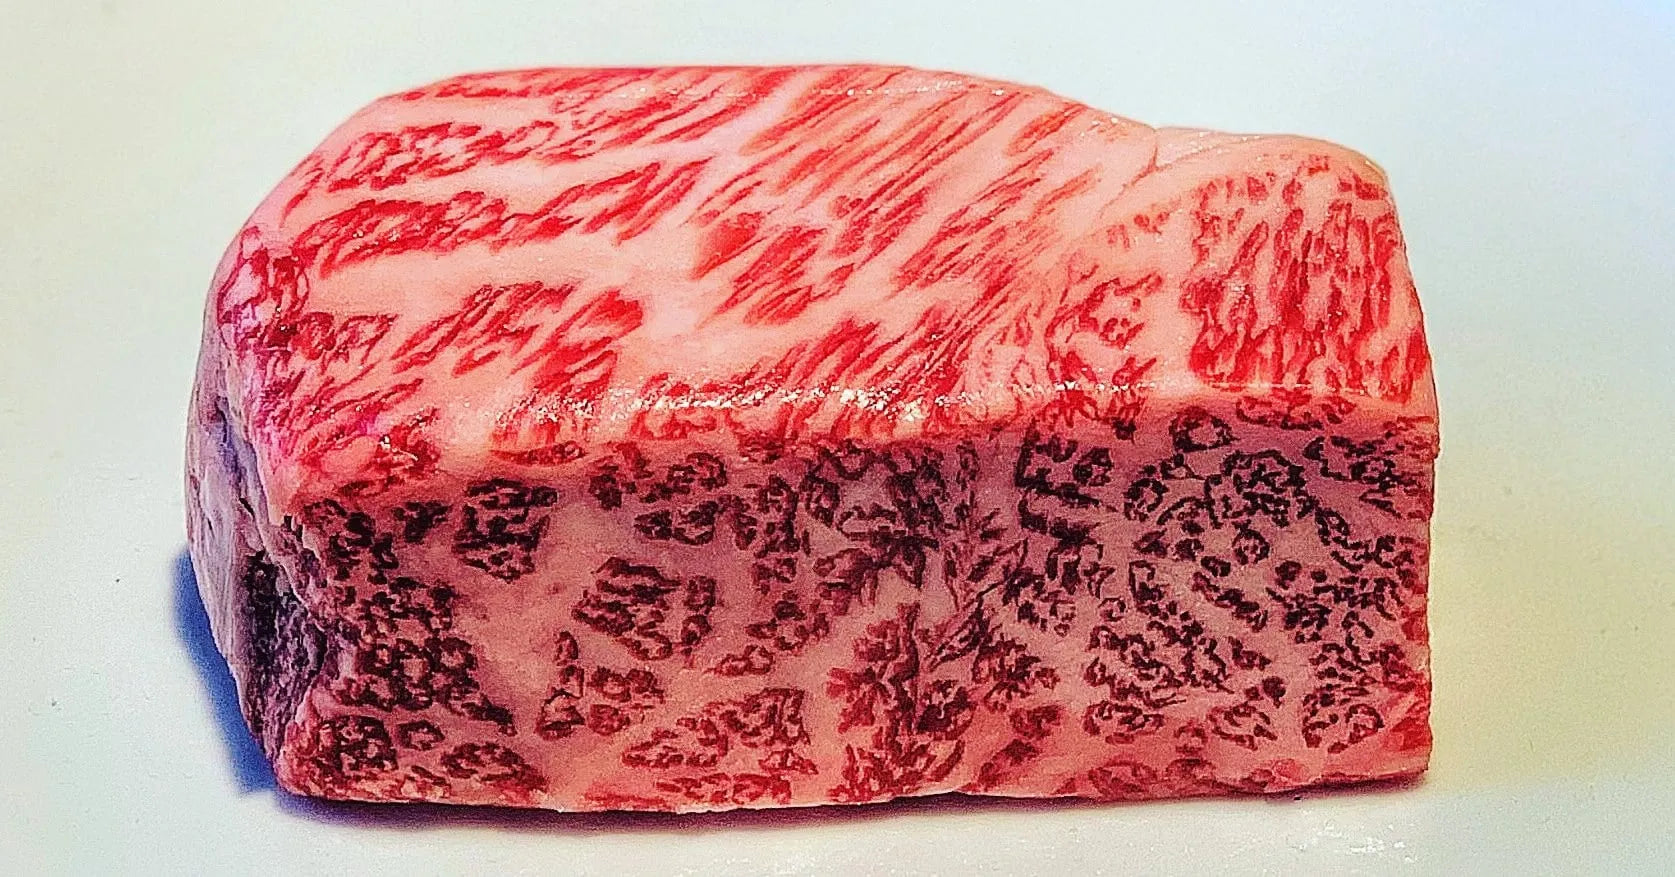 Japanese A5 Wagyu Filet Mignon Steaks – Farm 2 Fork